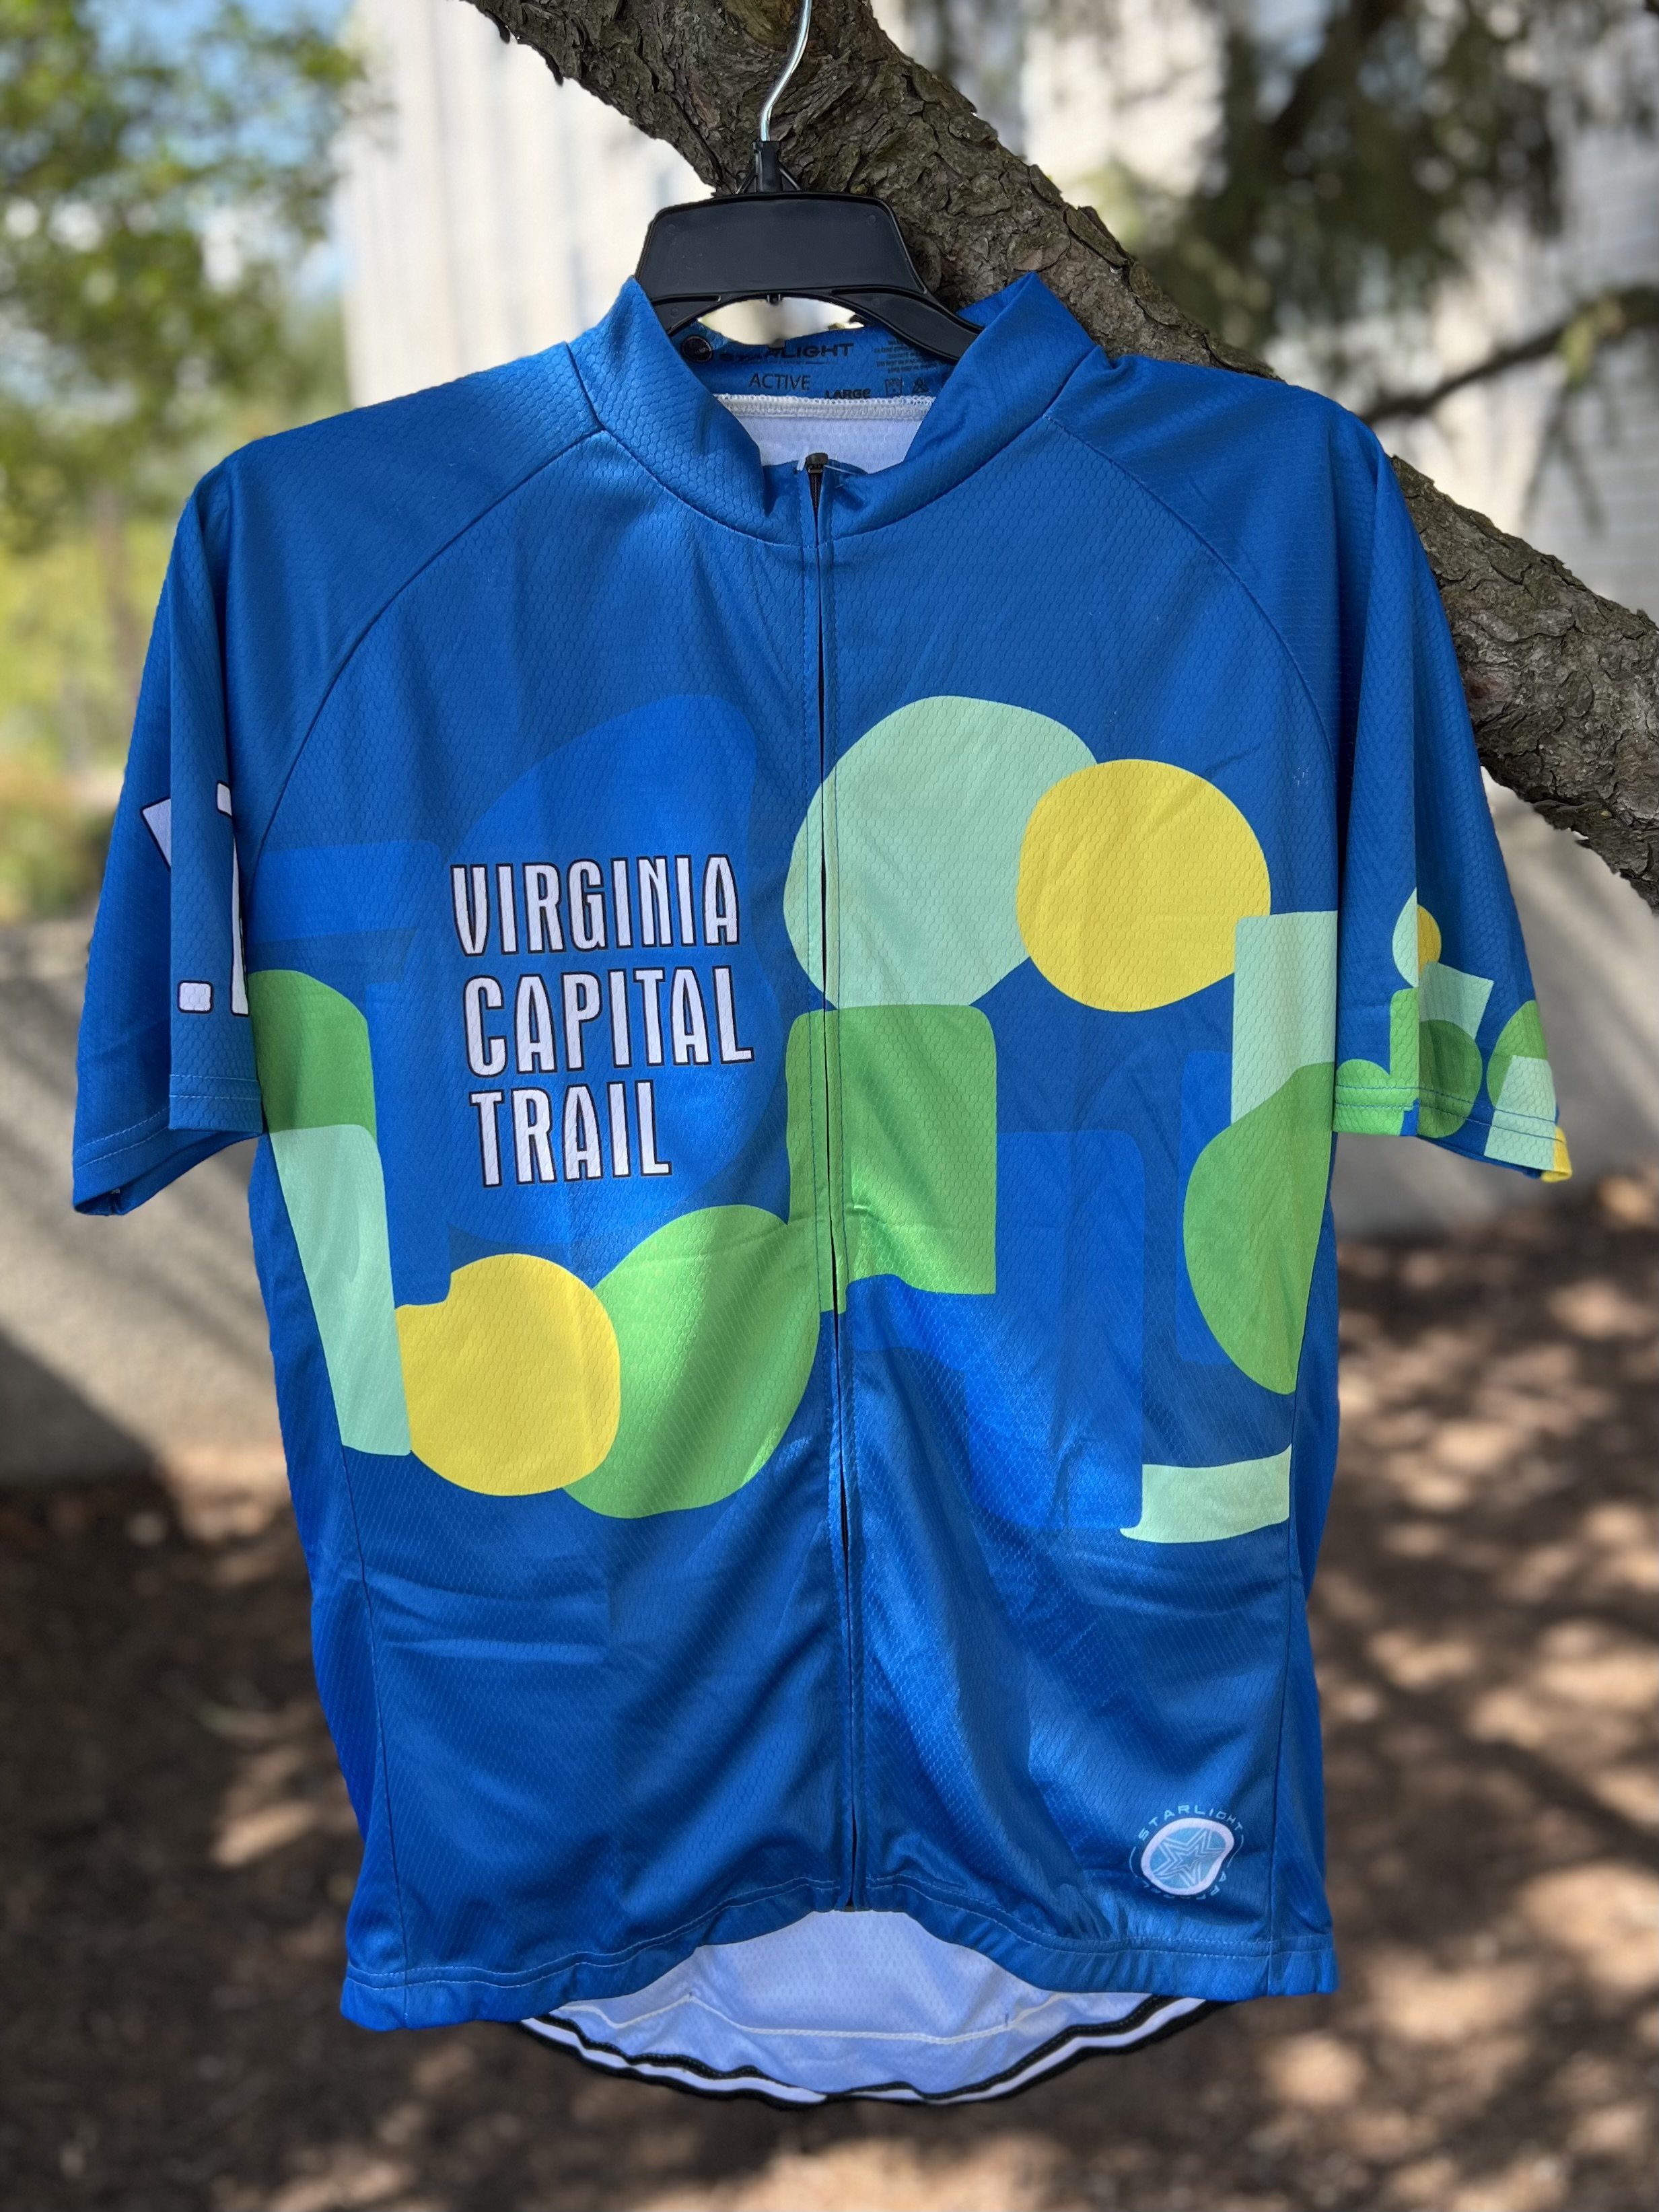 Capital Trail Store Shirts Accessories Gear — Virginia Capital Trail Foundation